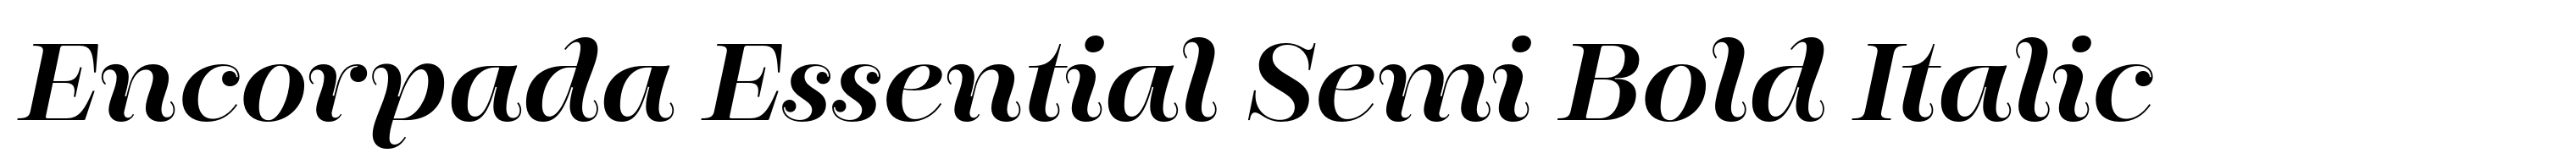 Encorpada Essential Semi Bold Italic